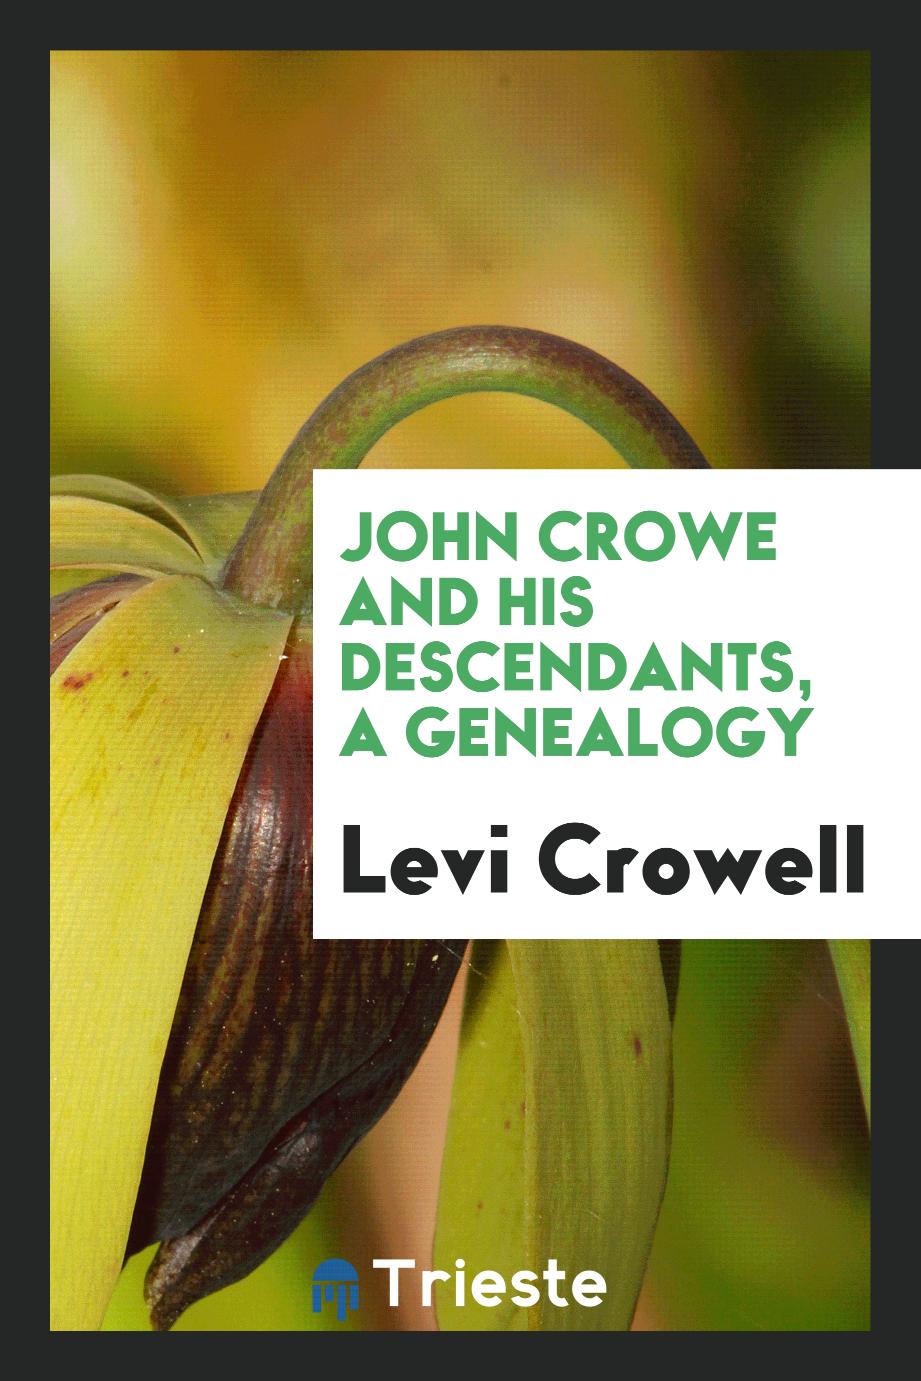 John Crowe and his descendants, a genealogy